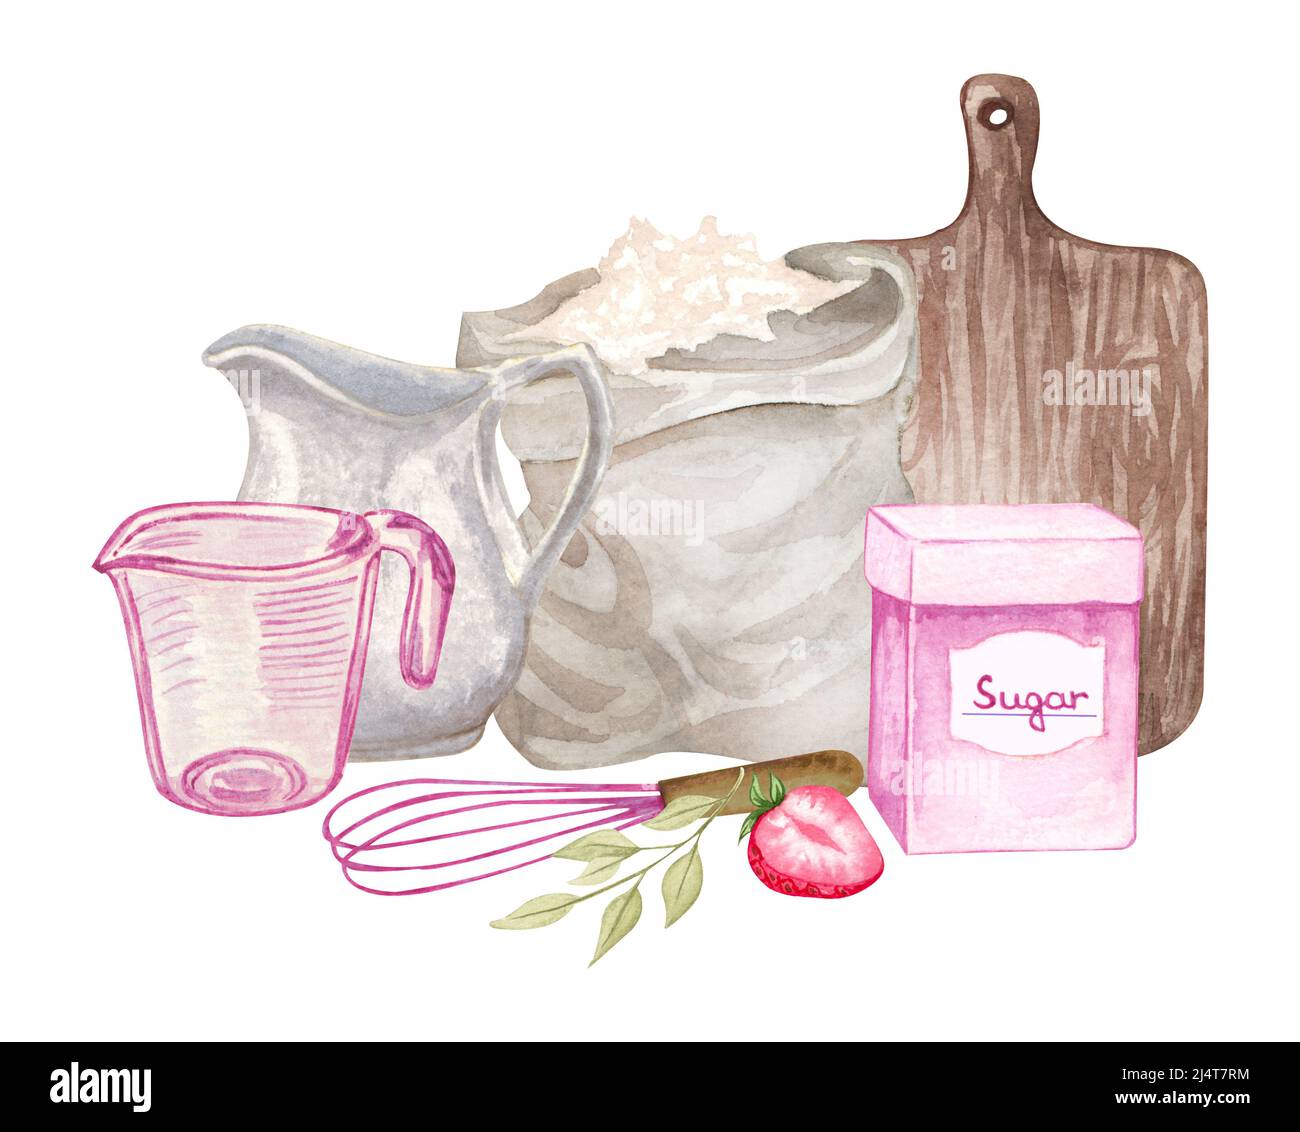 Watercolor baking supplies clipart. Pink kitchen utensils PNG